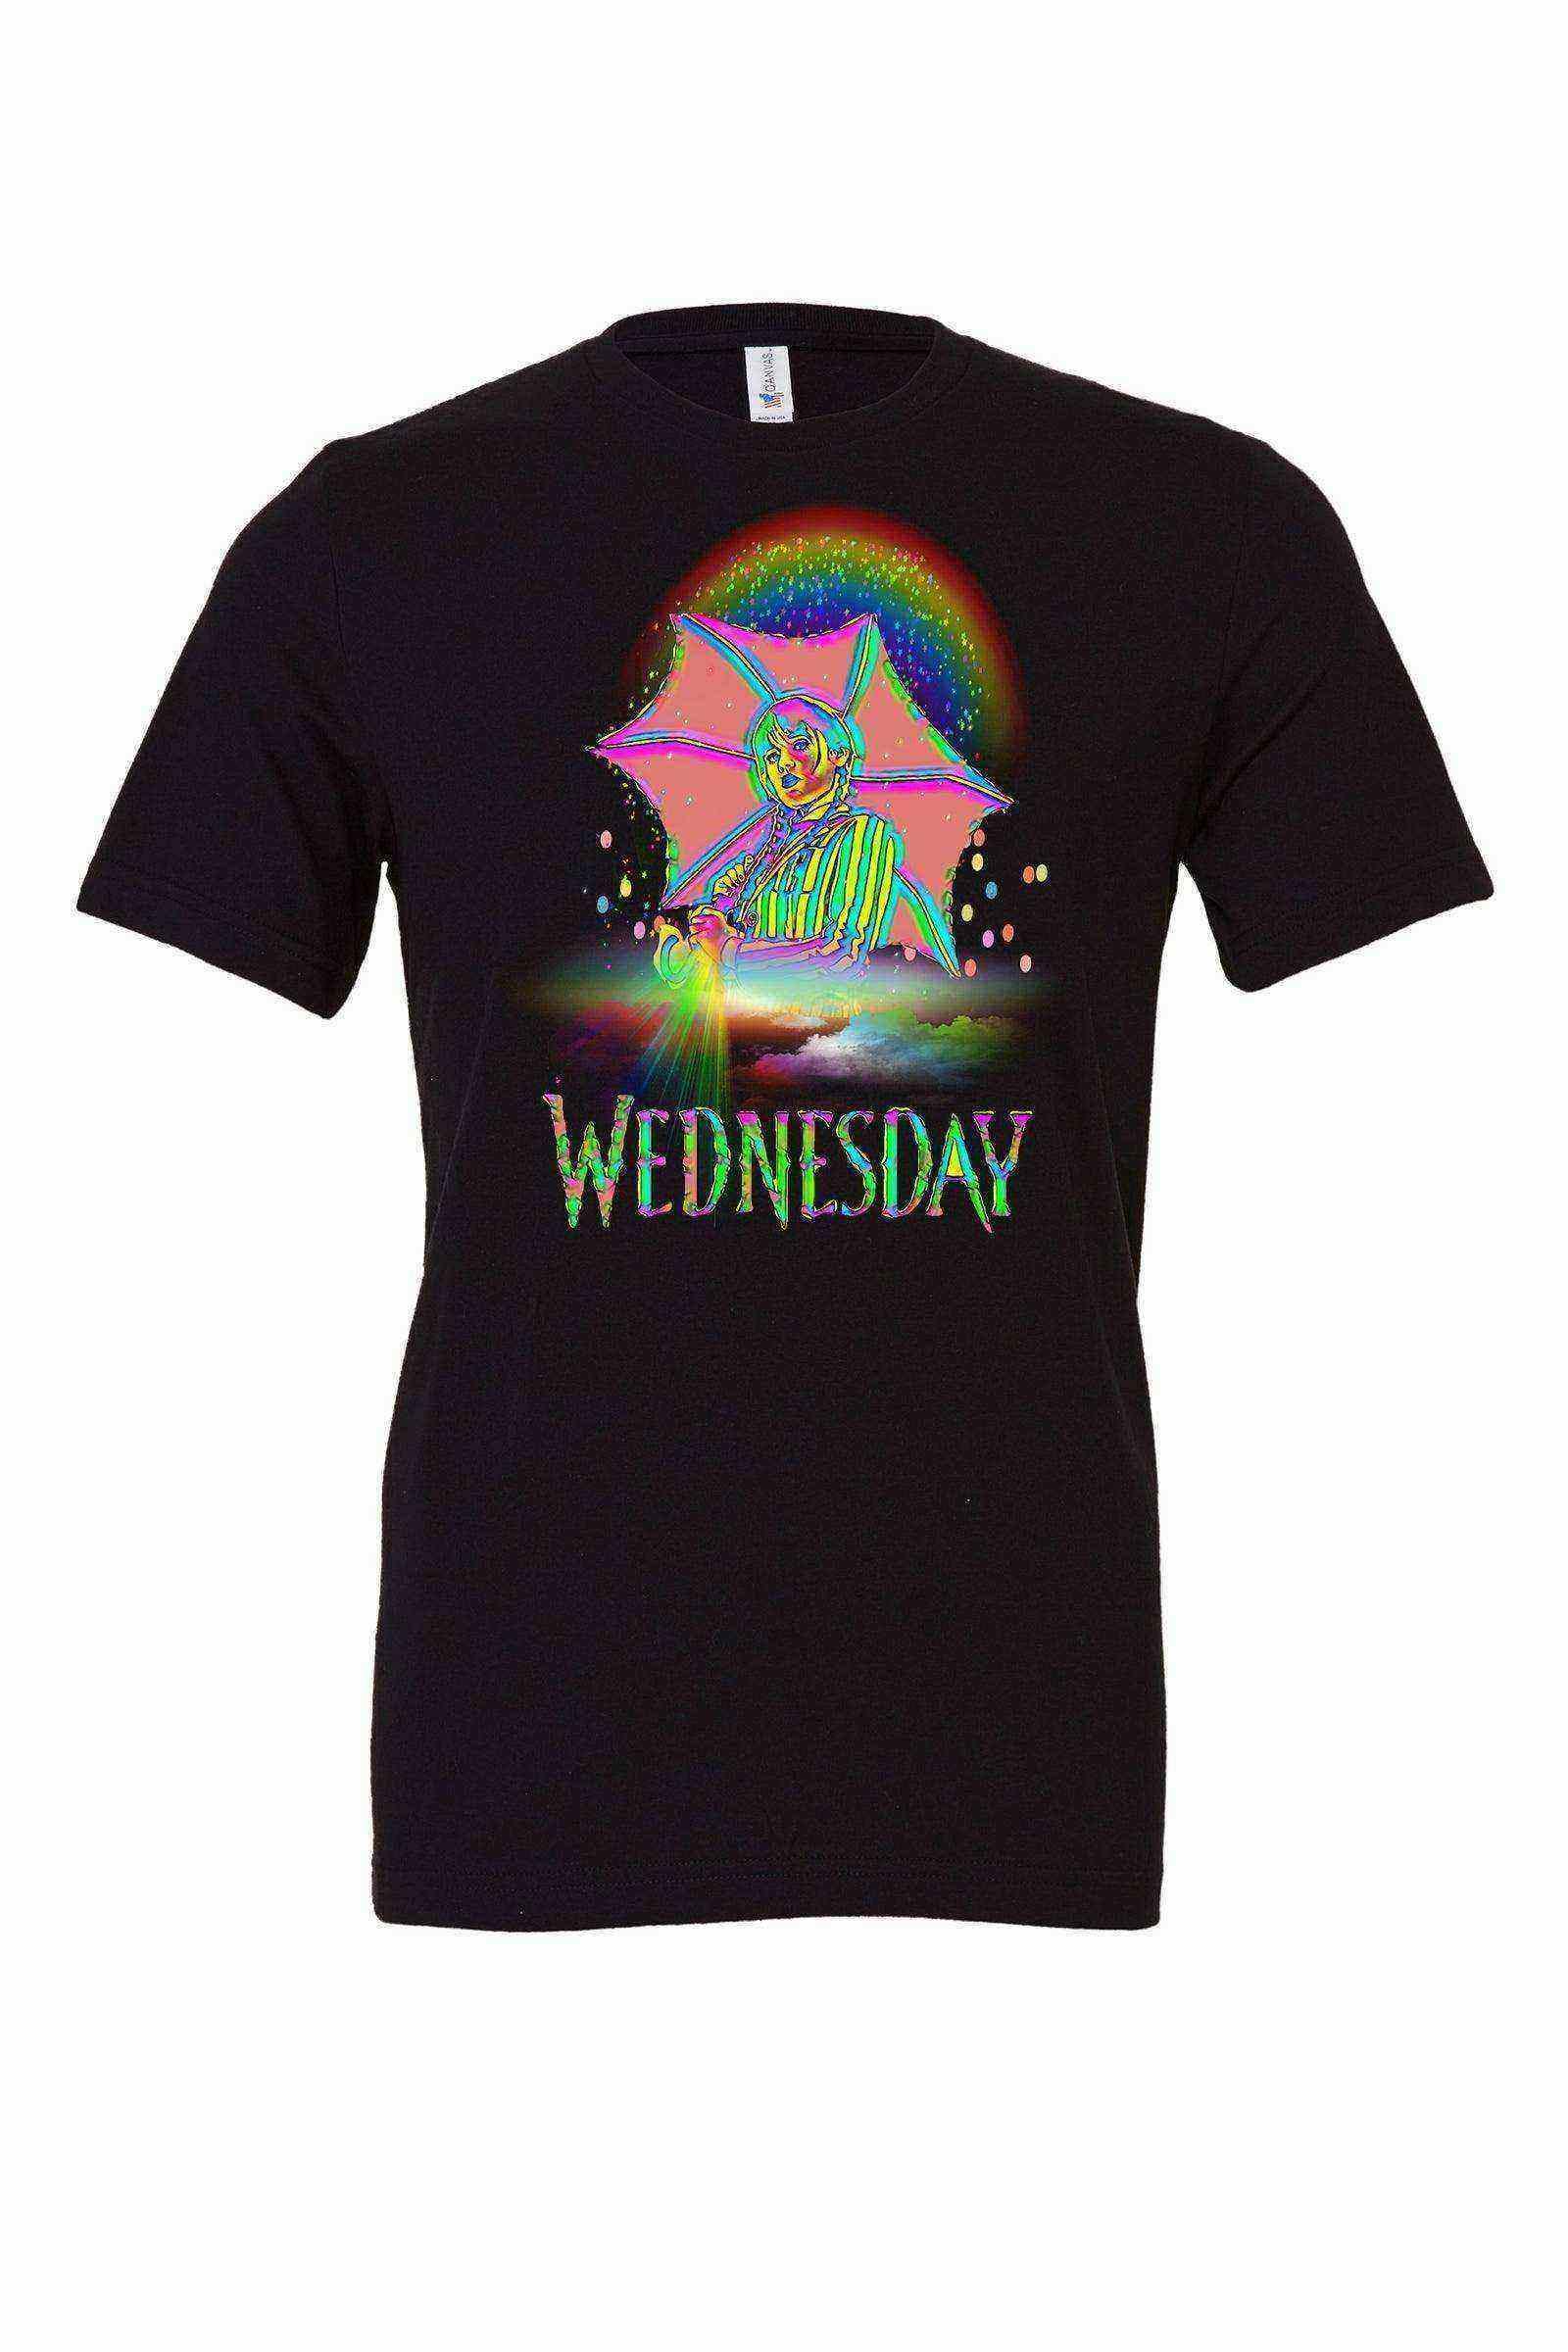 Toddler | Bright Wednesday Shirt | Umbrella Girl Shirt | The Addams Shirt - Dylan's Tees